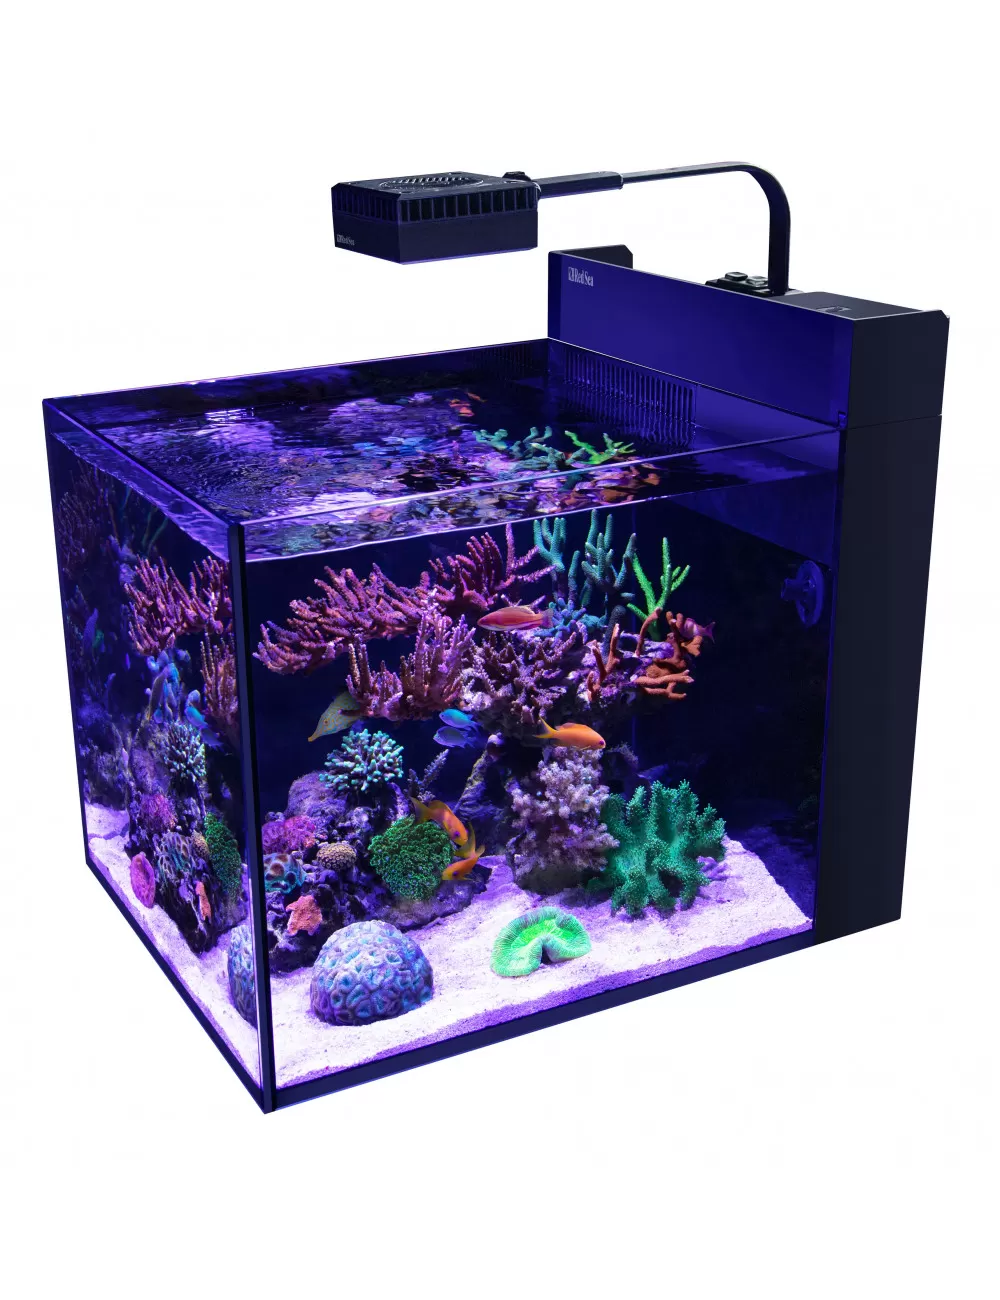 Le brassage Aquarium récifal / aquarium marin / aquarium eau de